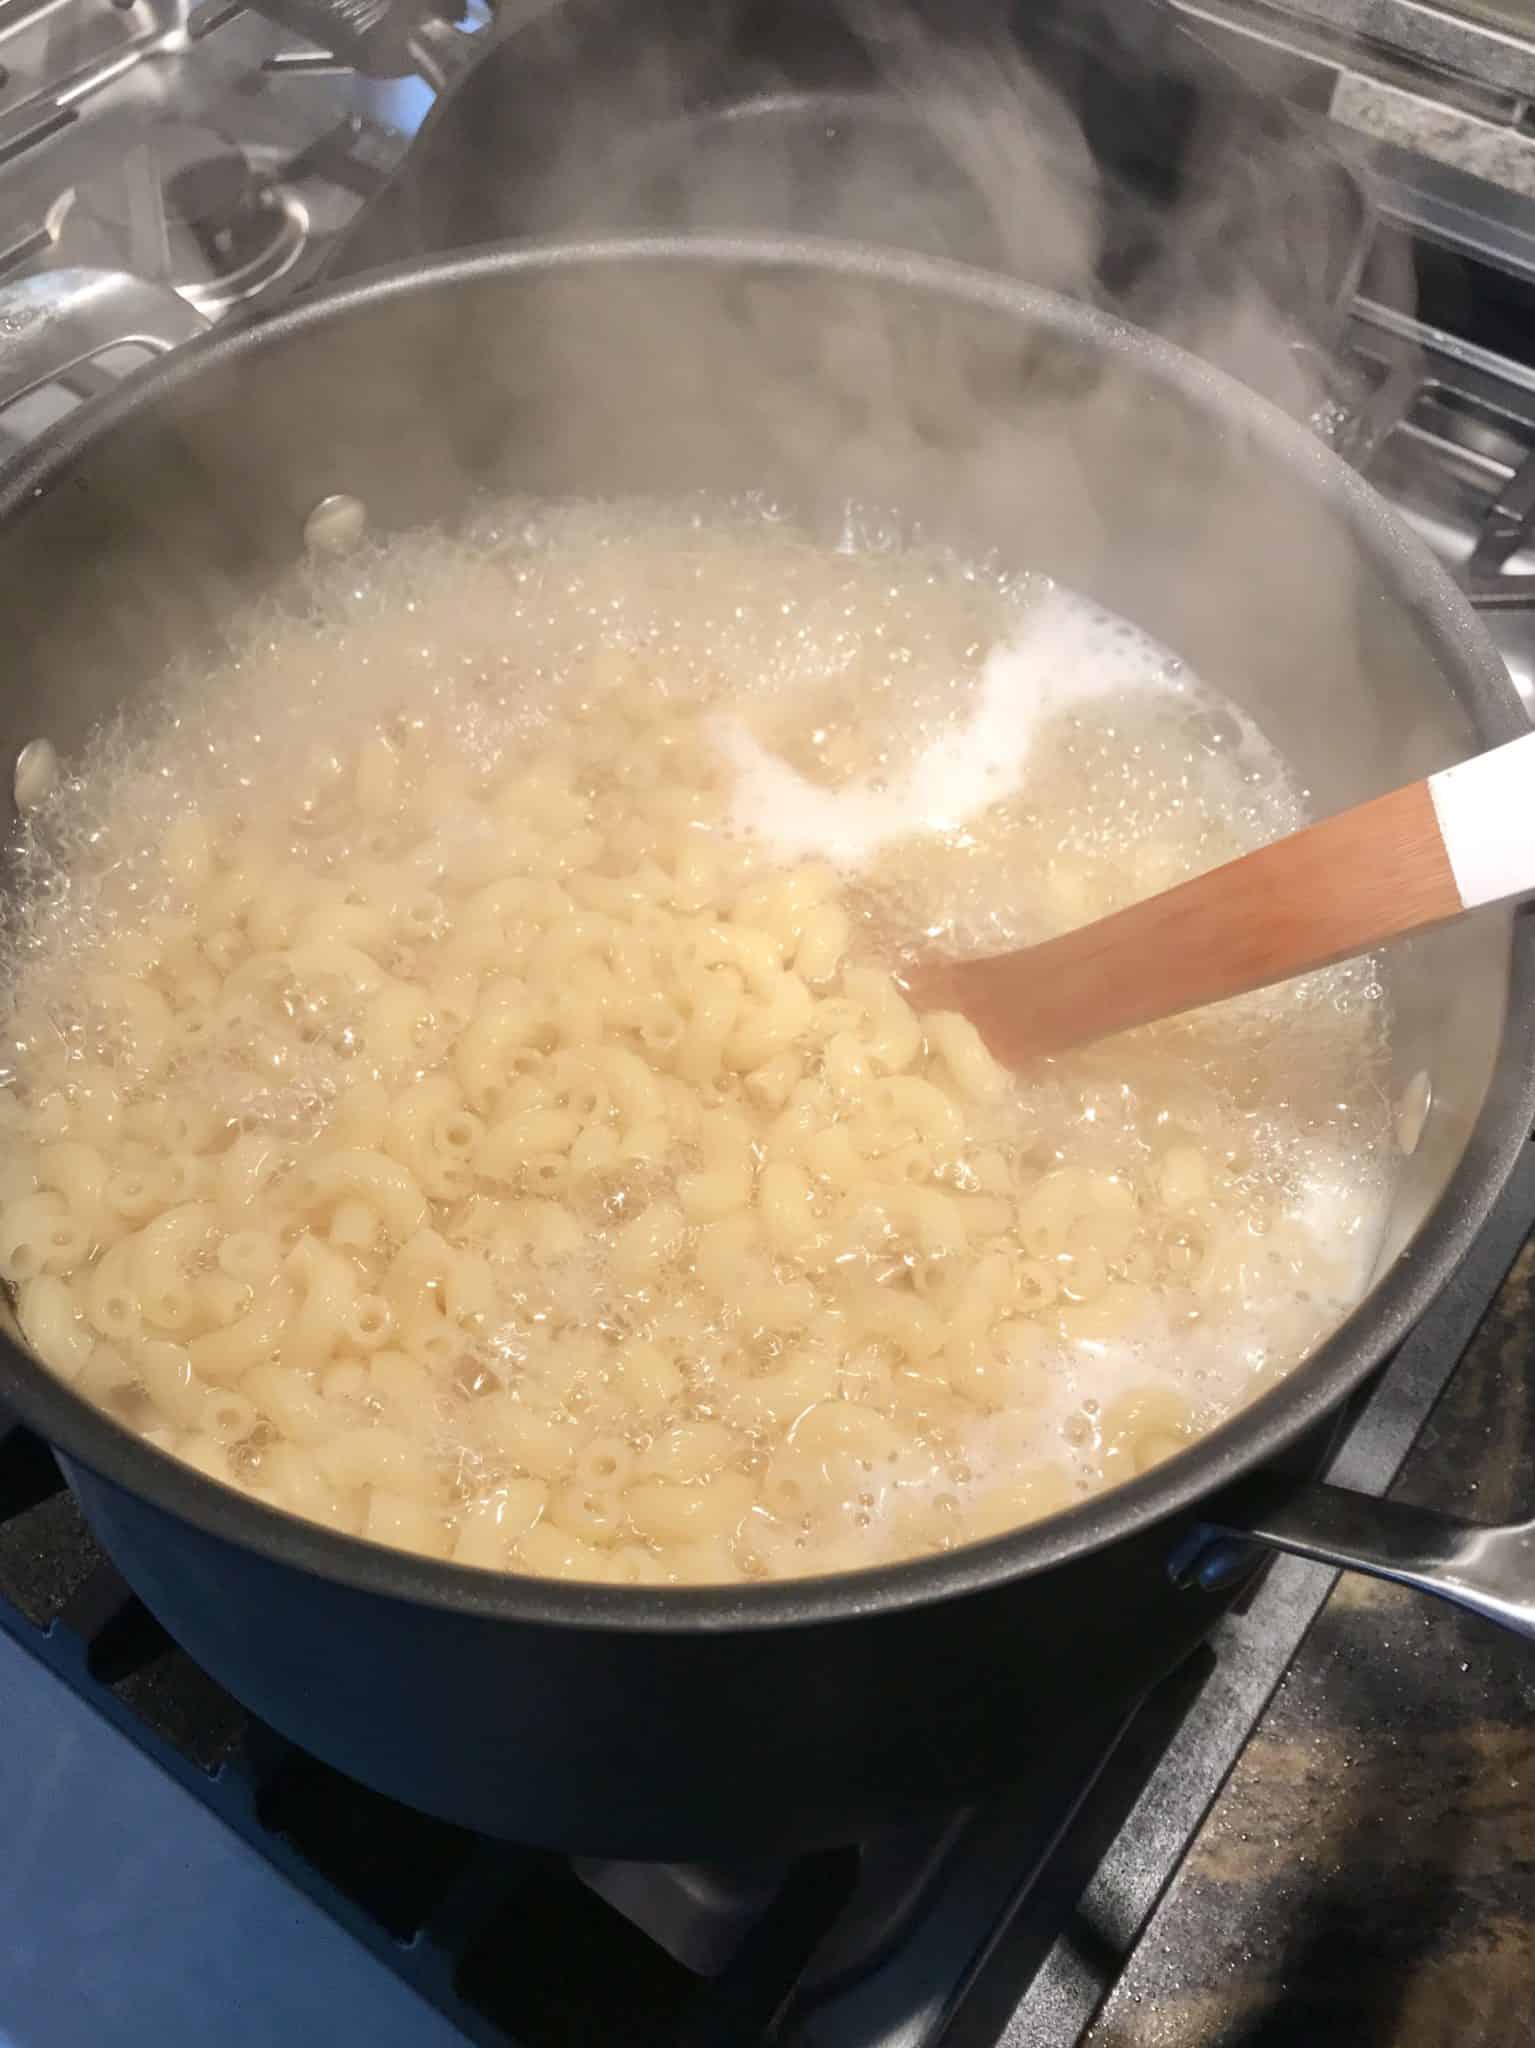 Noodles cooking